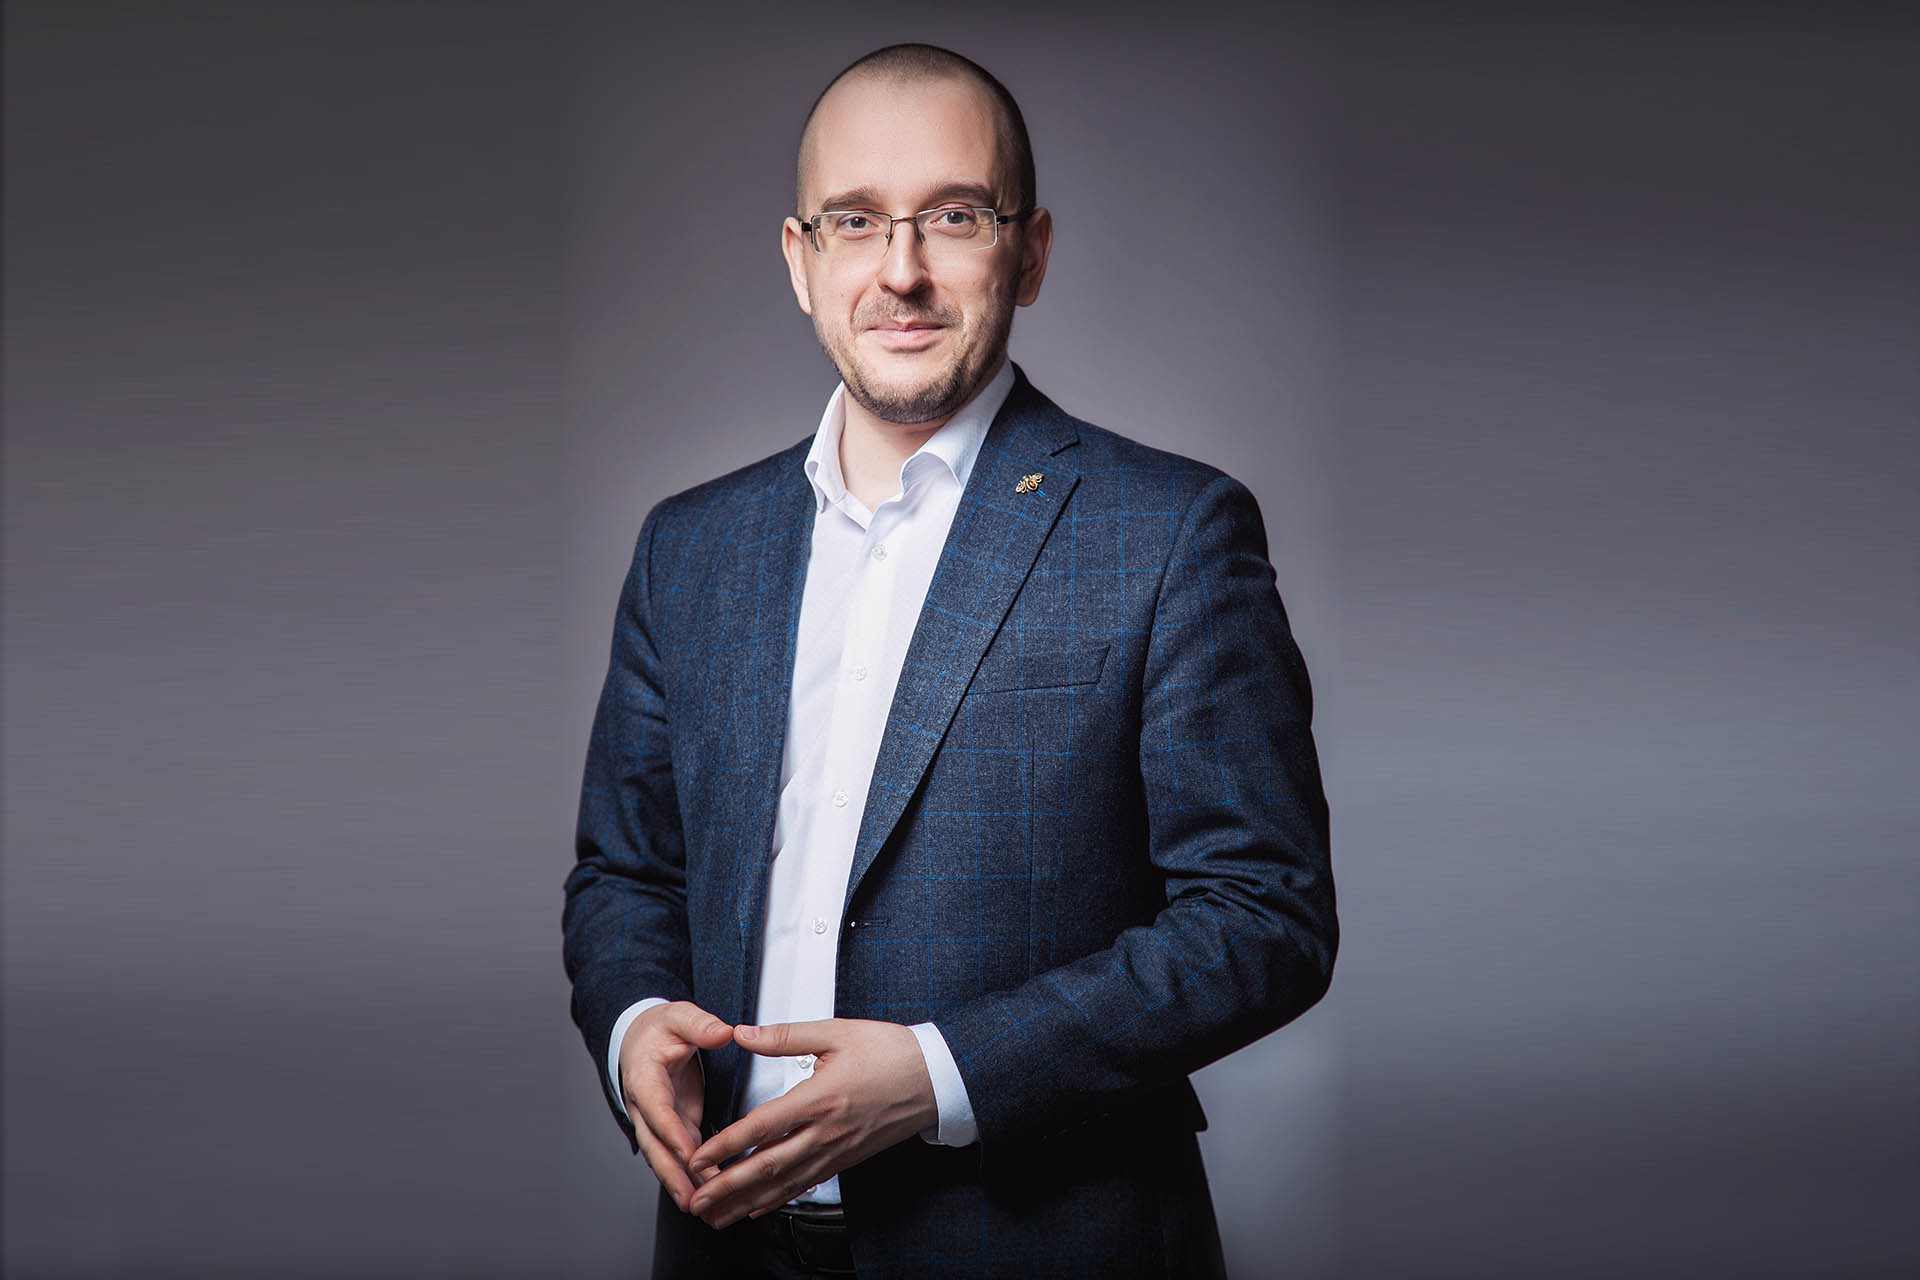 Алексей Дерюшкин - бизнес-тренер и консультант по гибким методологиям